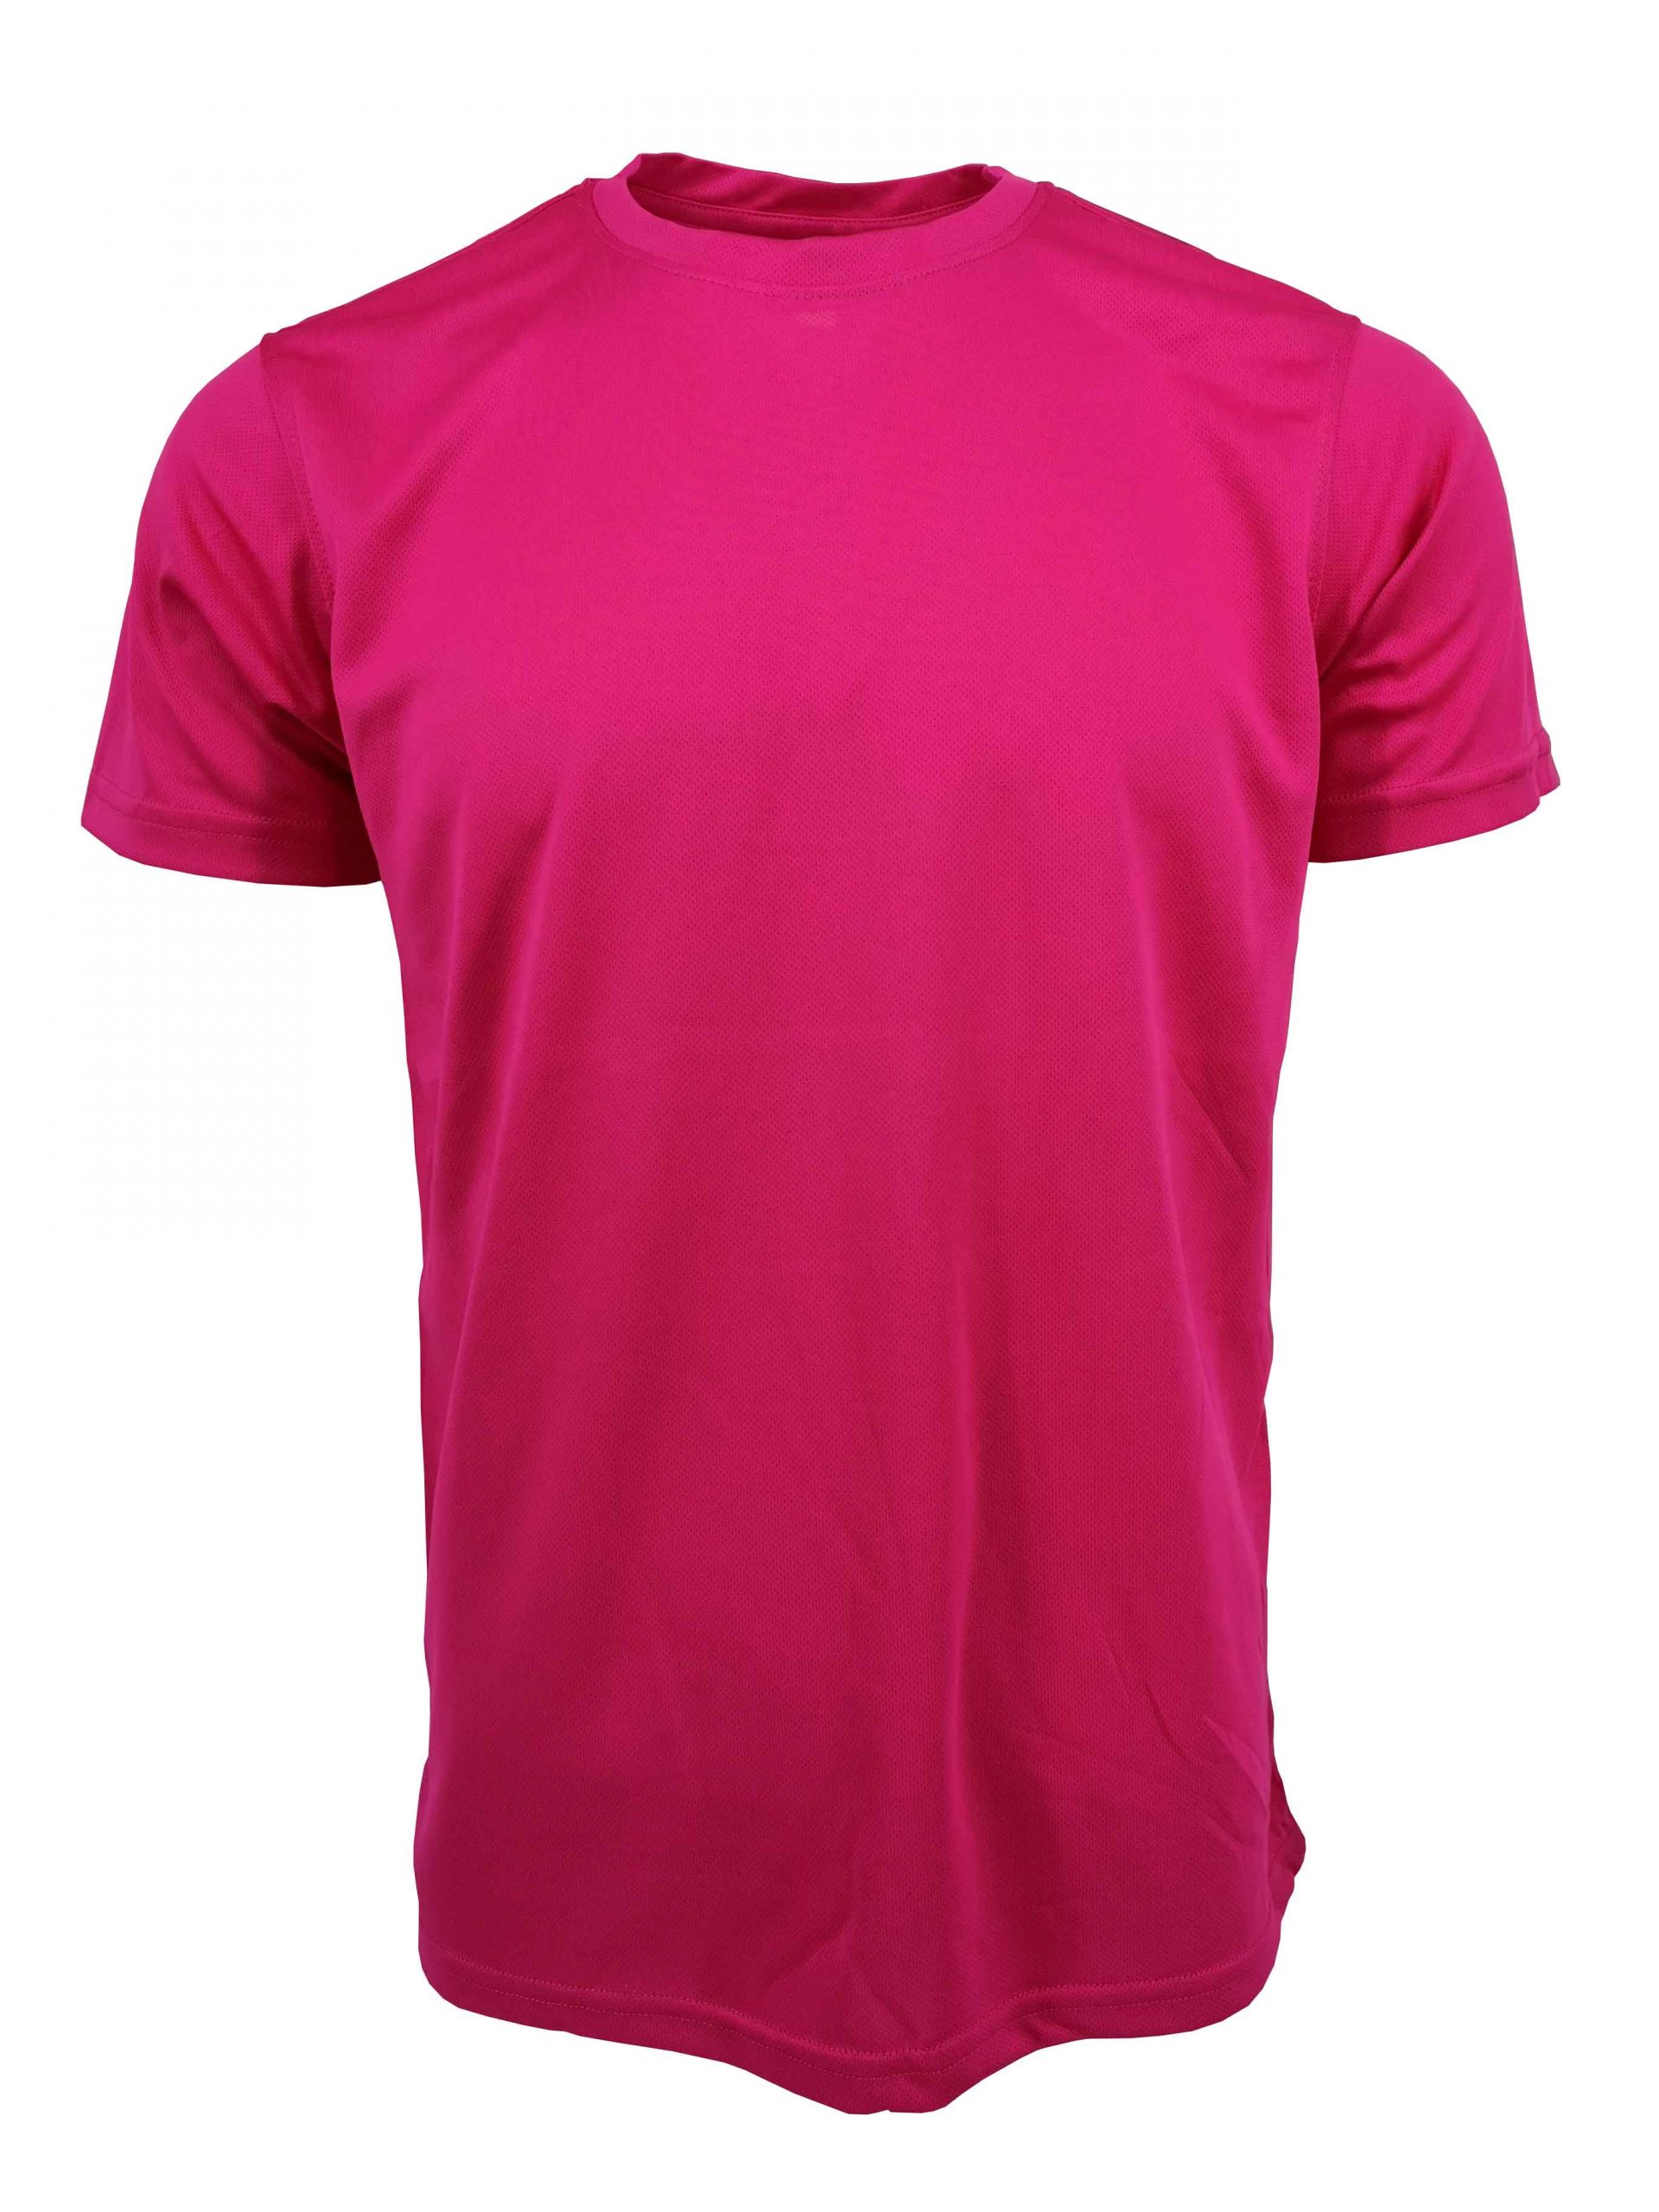 QDR 5140 Magenta - Rightway Basic T-Shirt | Basic T-Shirt Supplier ...